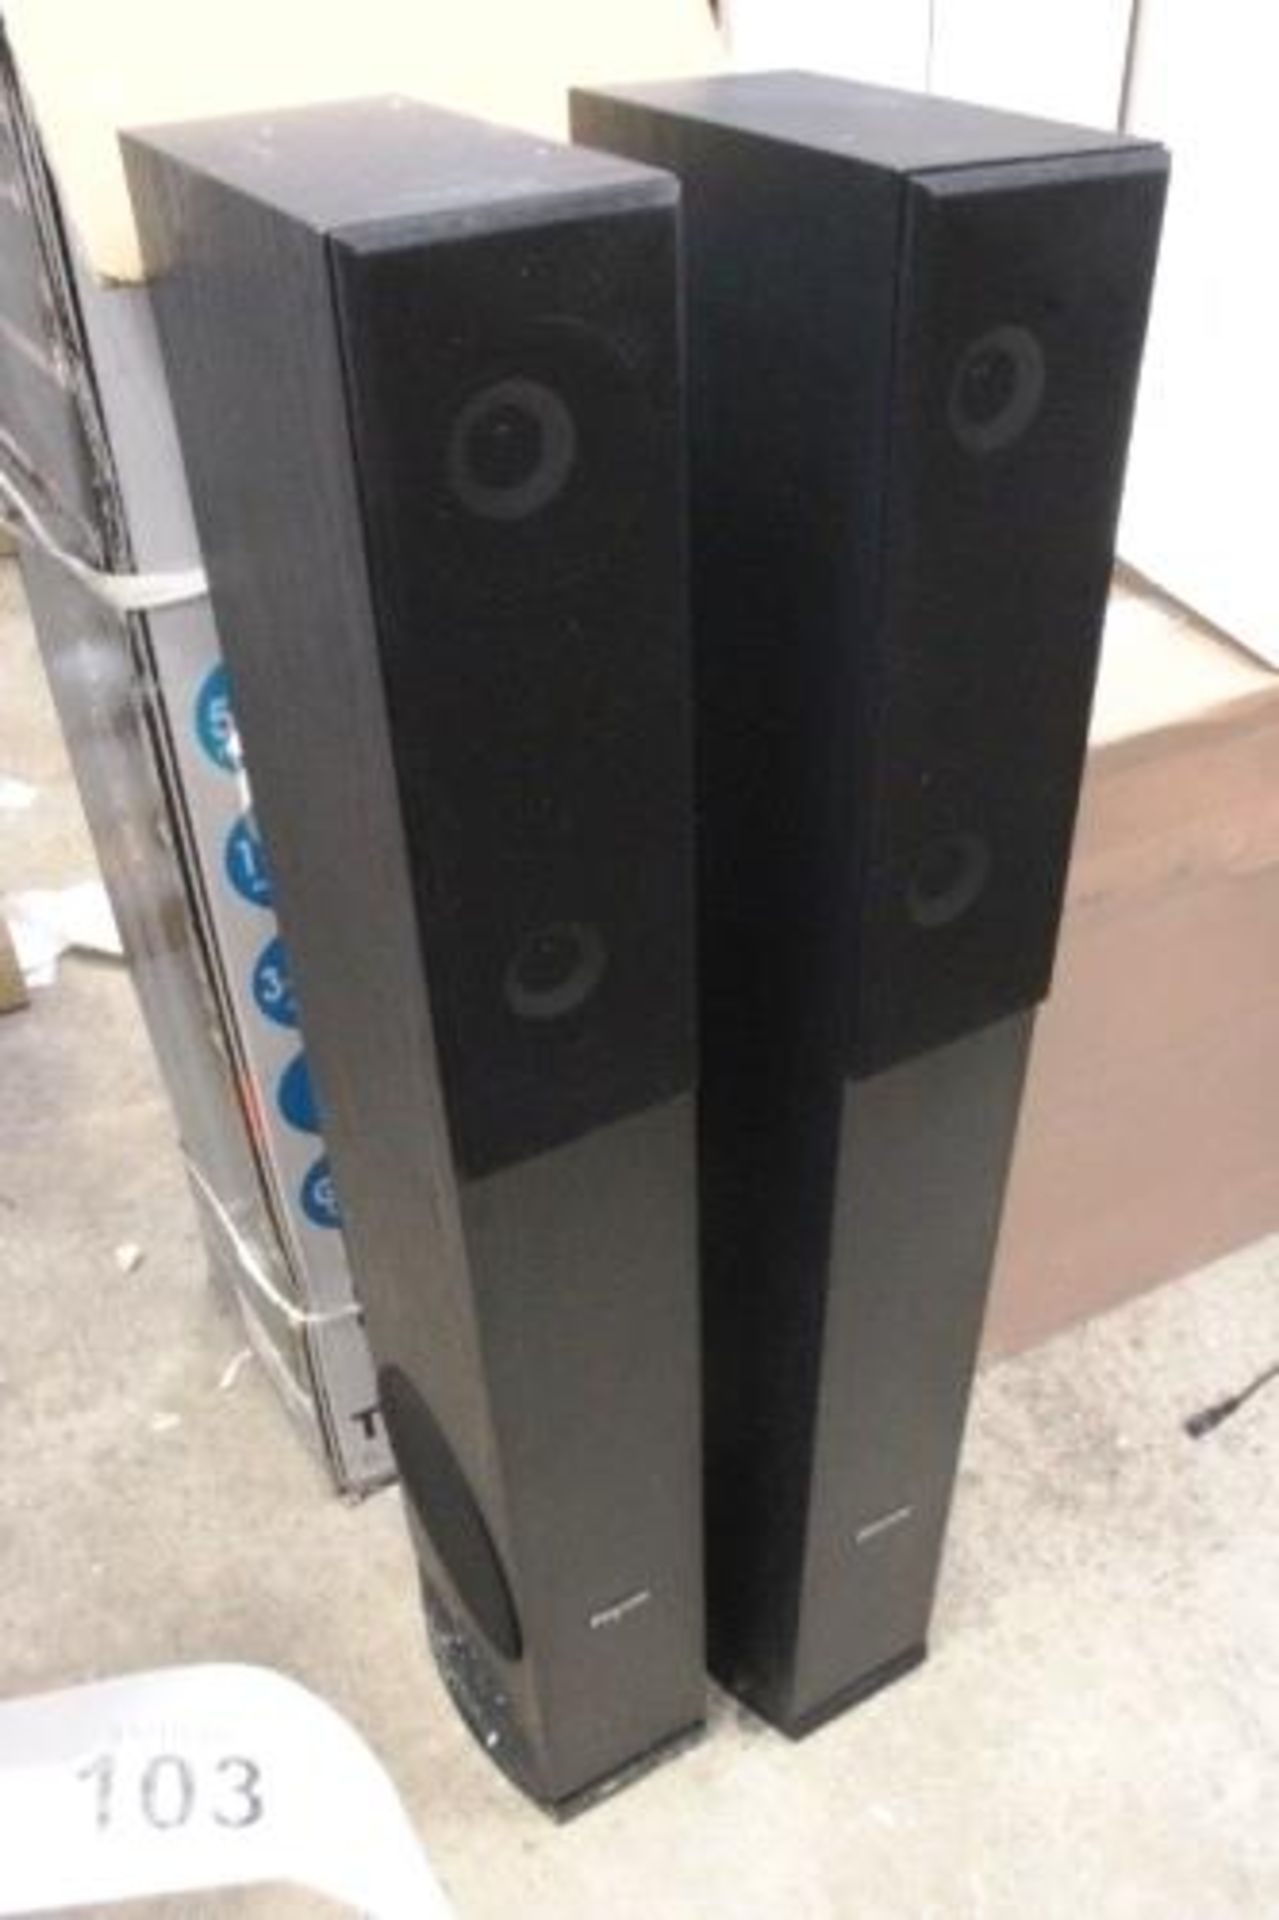 Fenton black tower speaker set, 500W max, model SHFT52B - New in box (ES8)